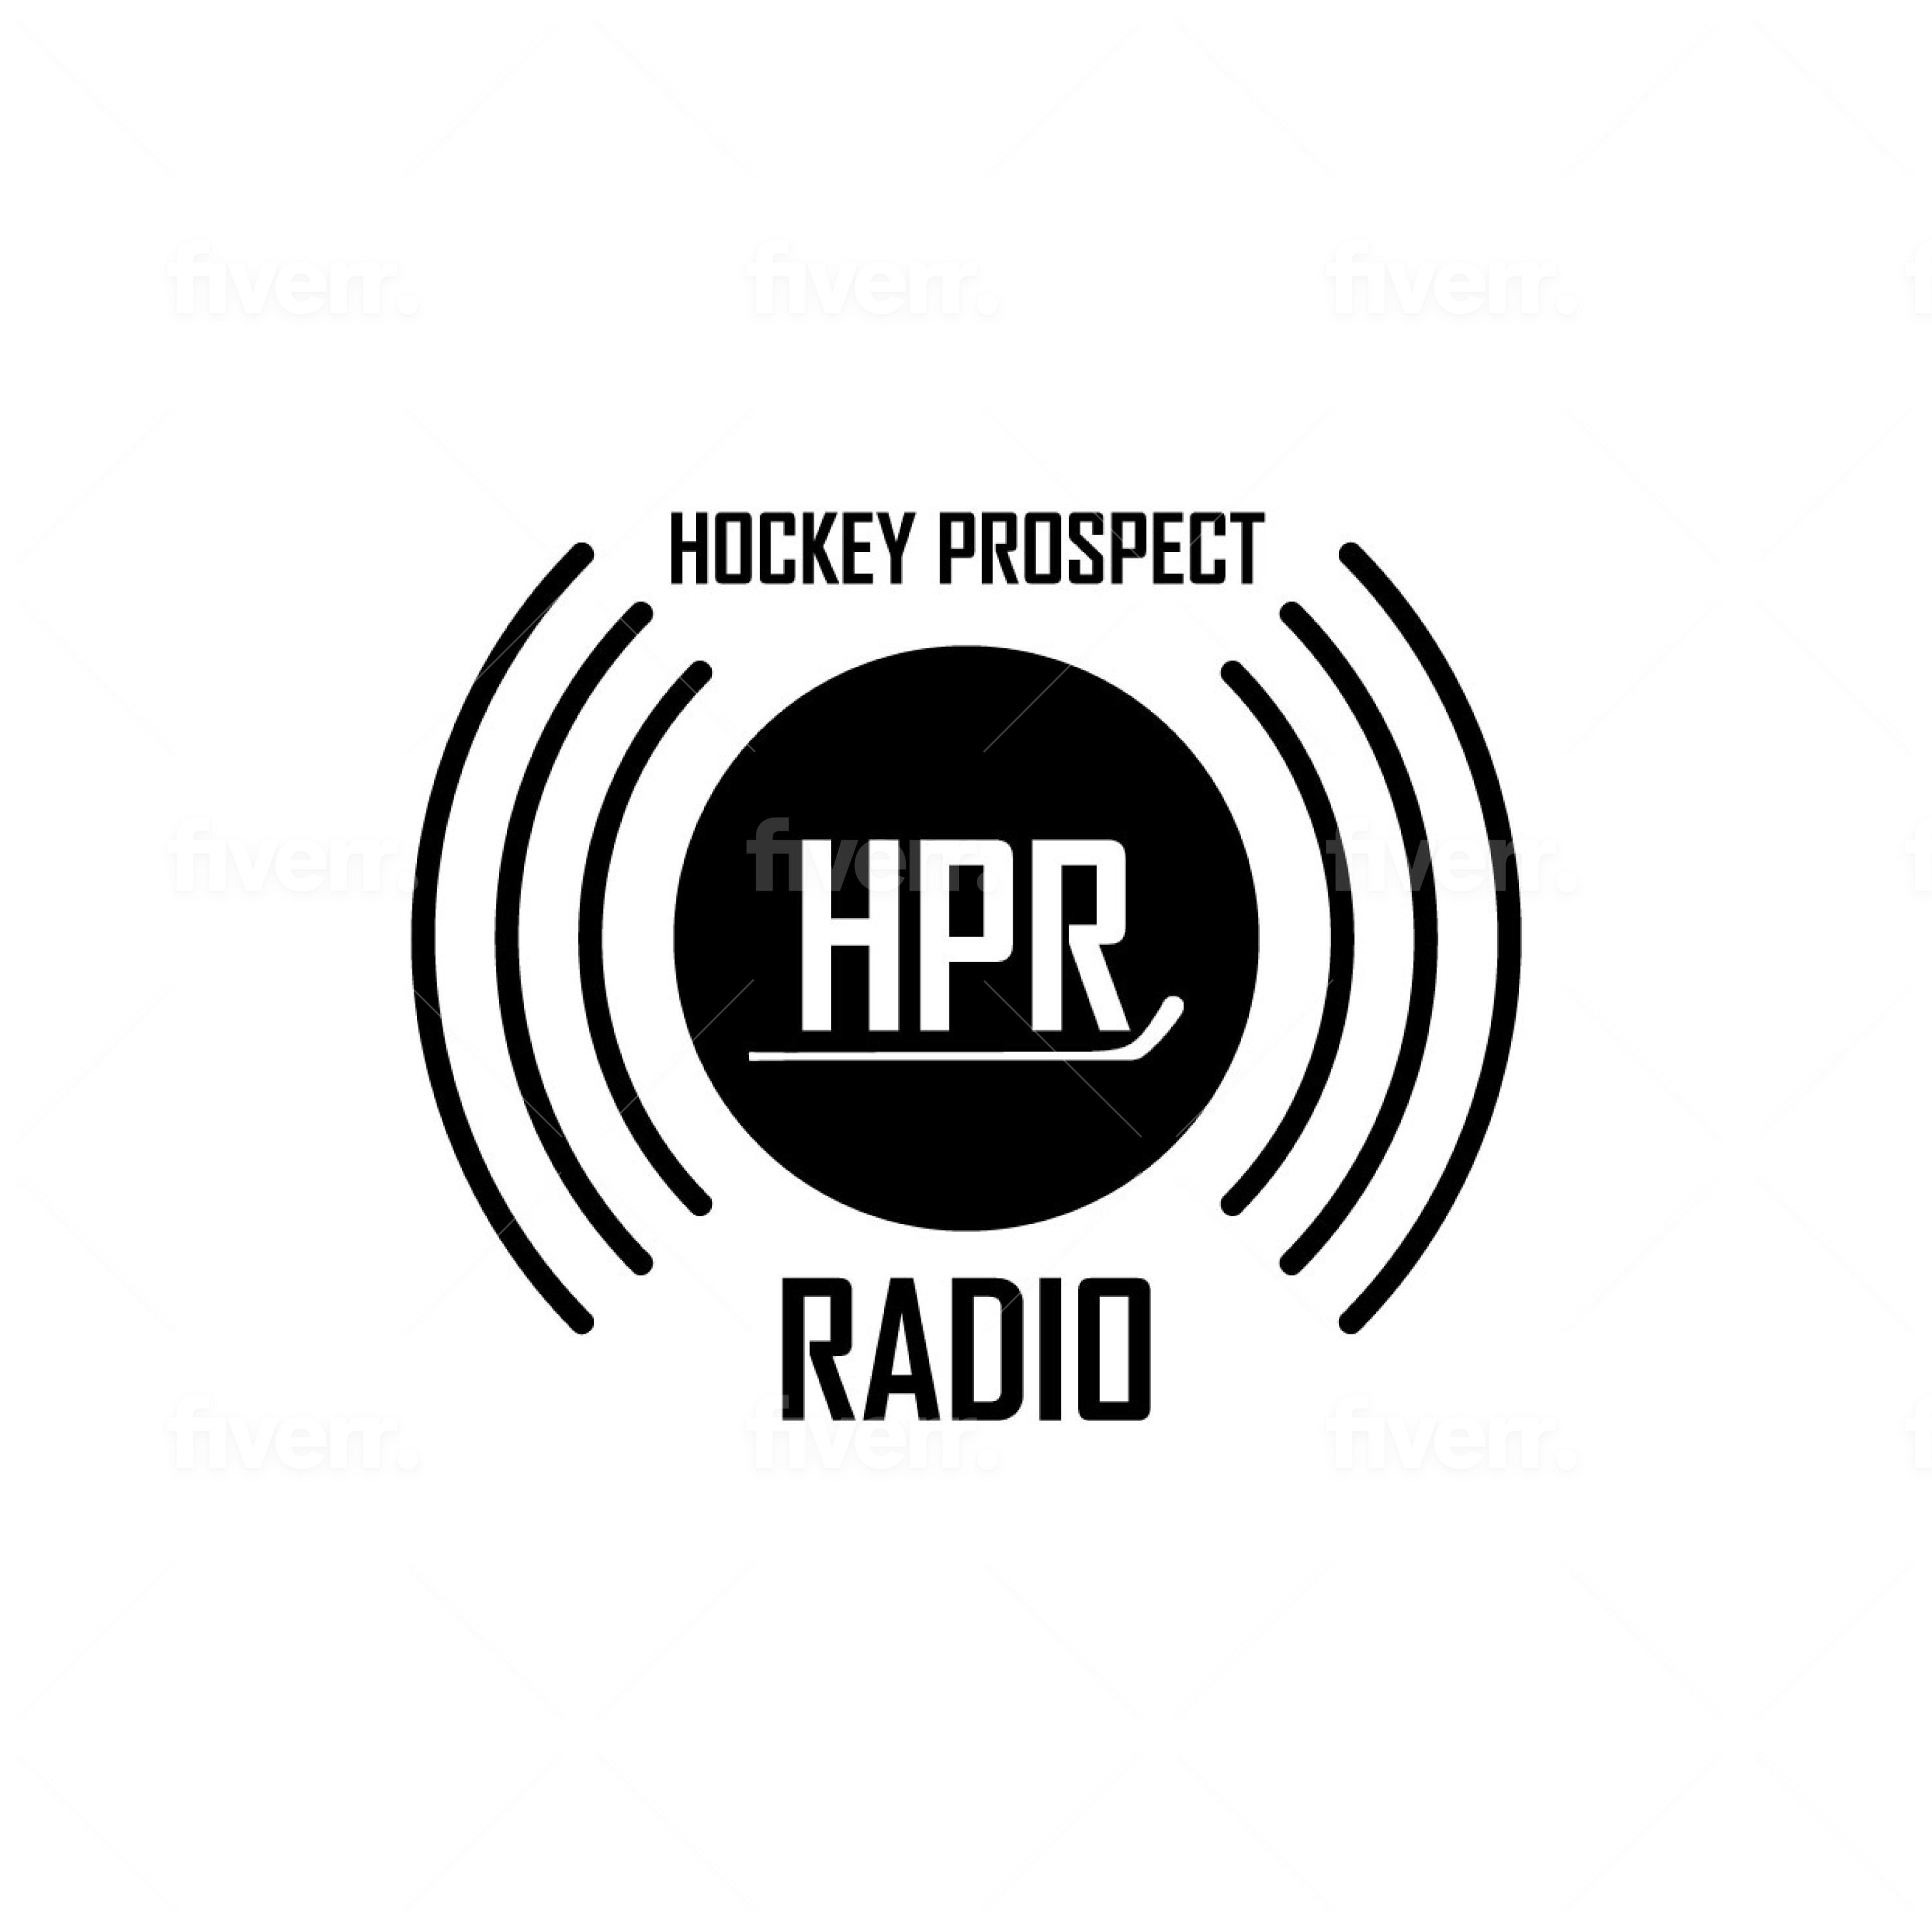 HPR - Season 19 - Episode 19 - Segment 6 with Pat Malloy - Player Development